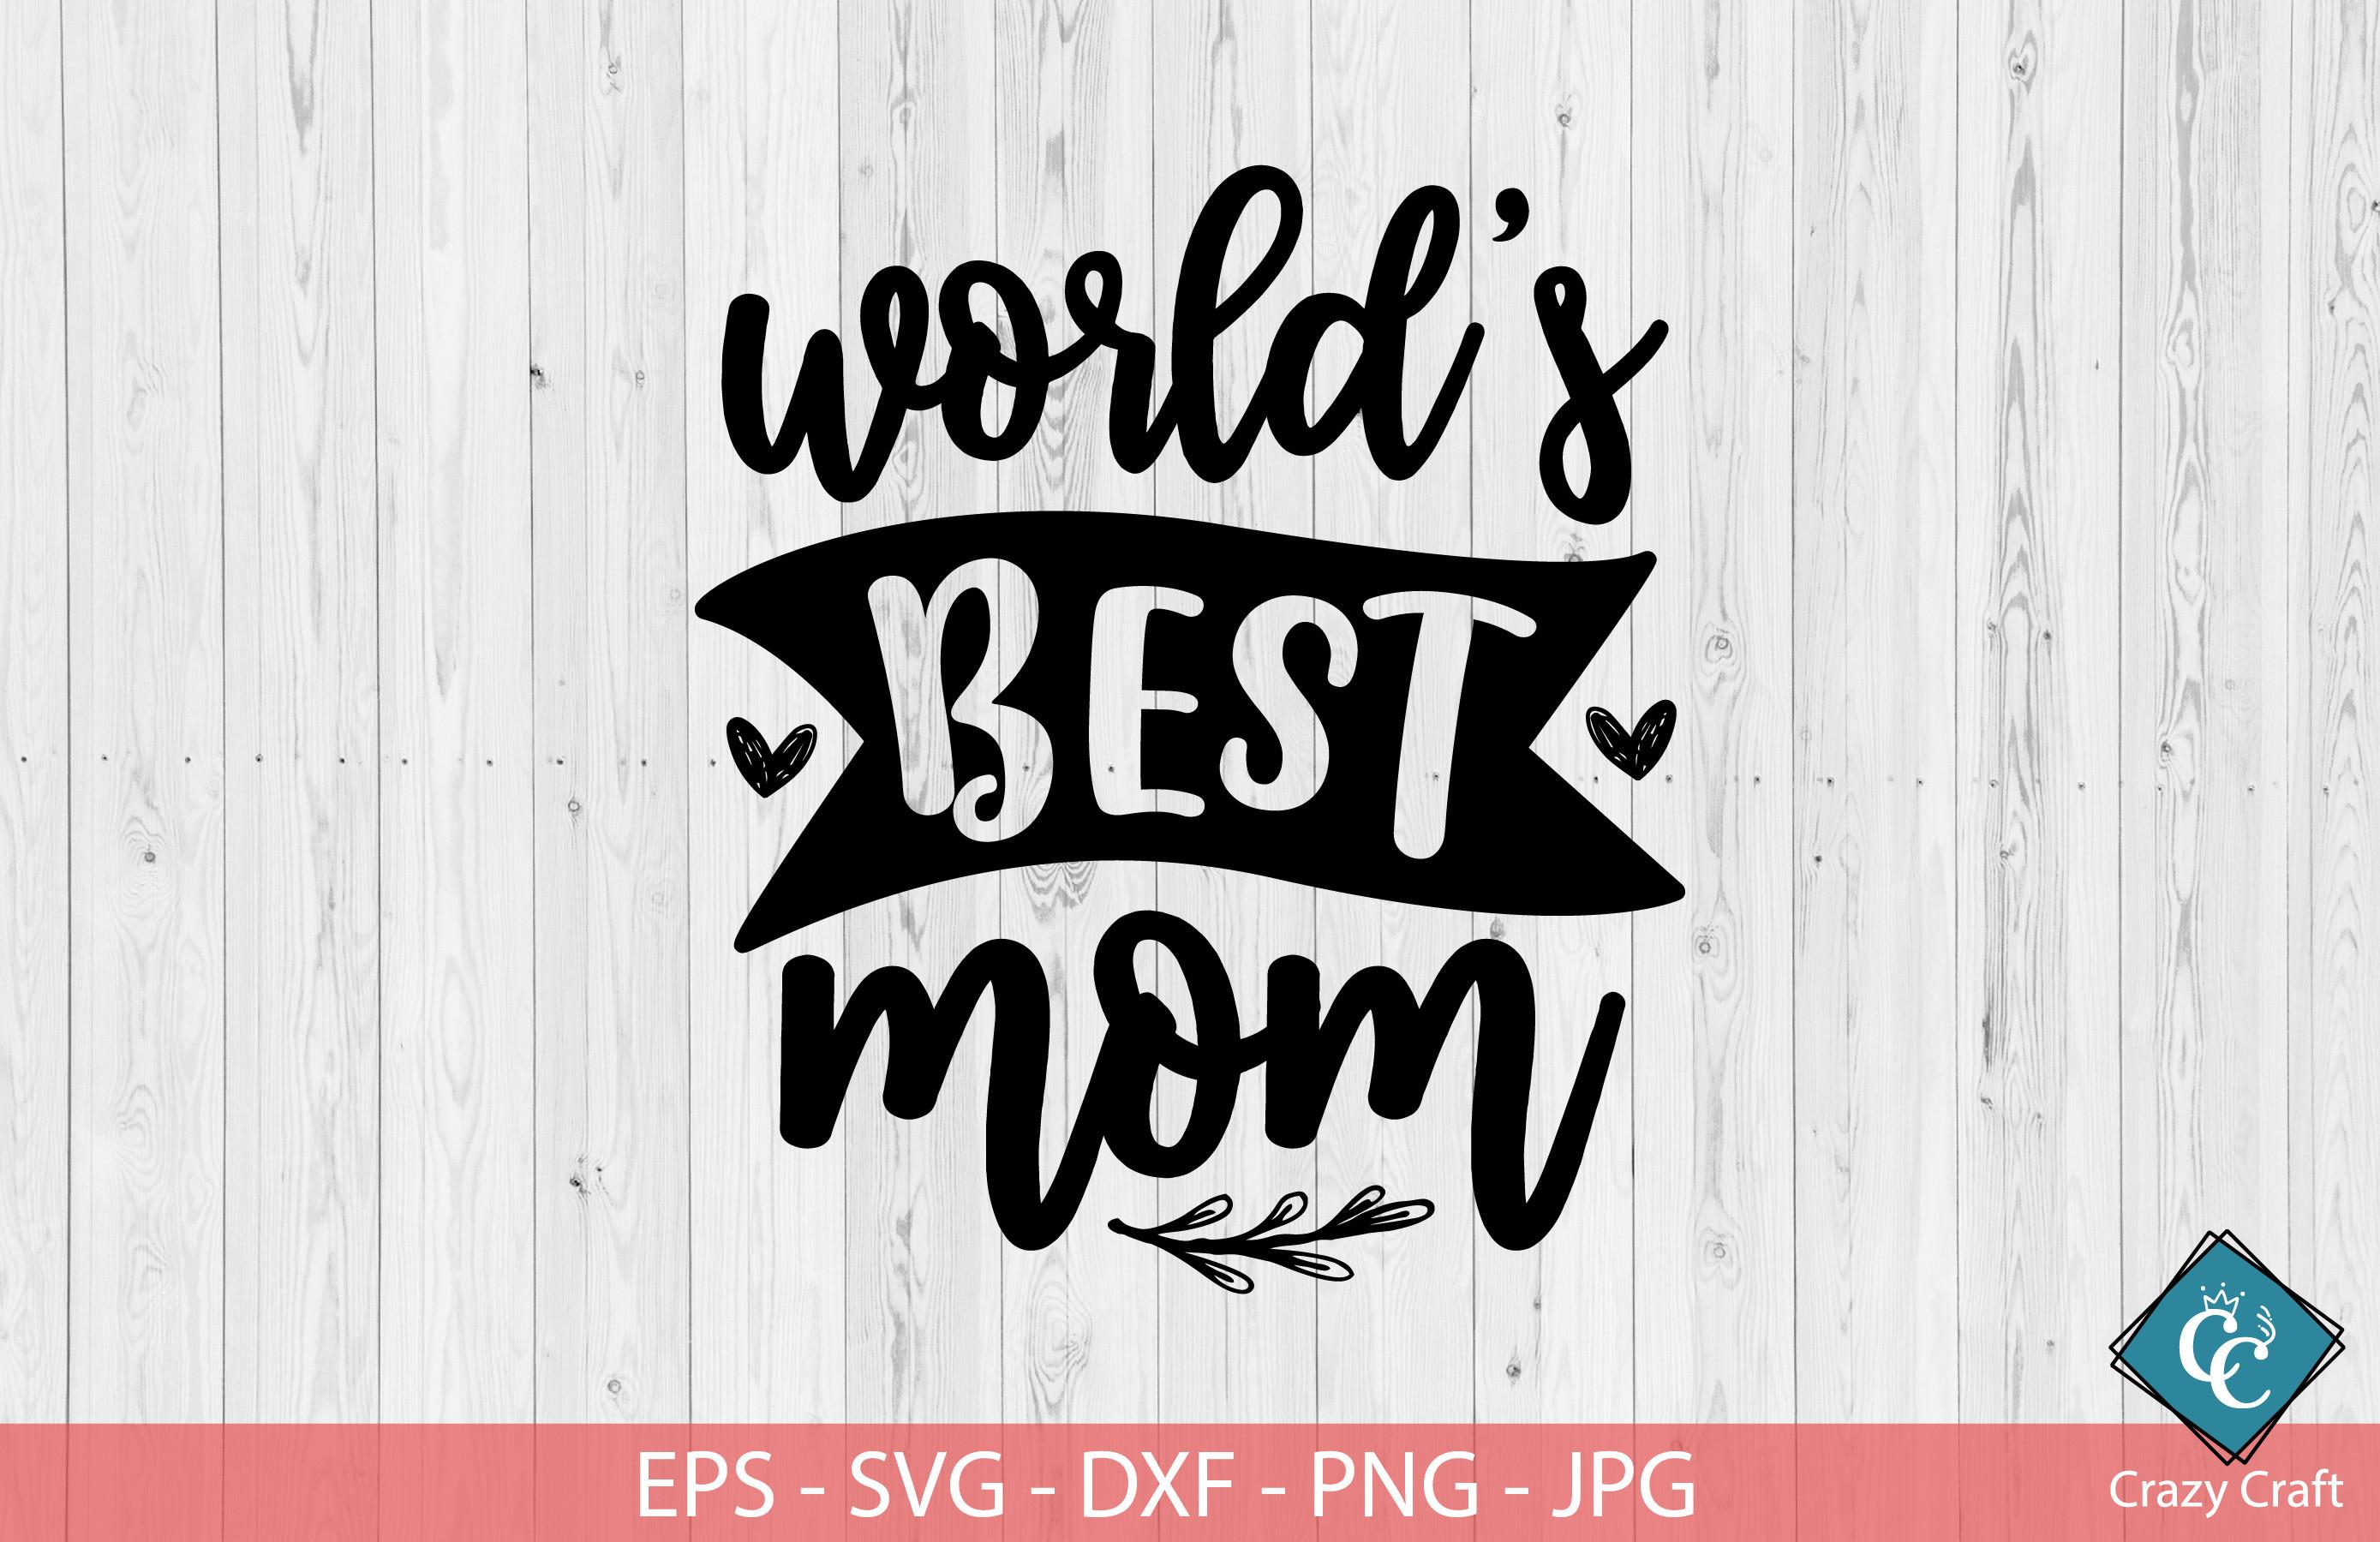 World's Best Mom. Mother’s Day Design.